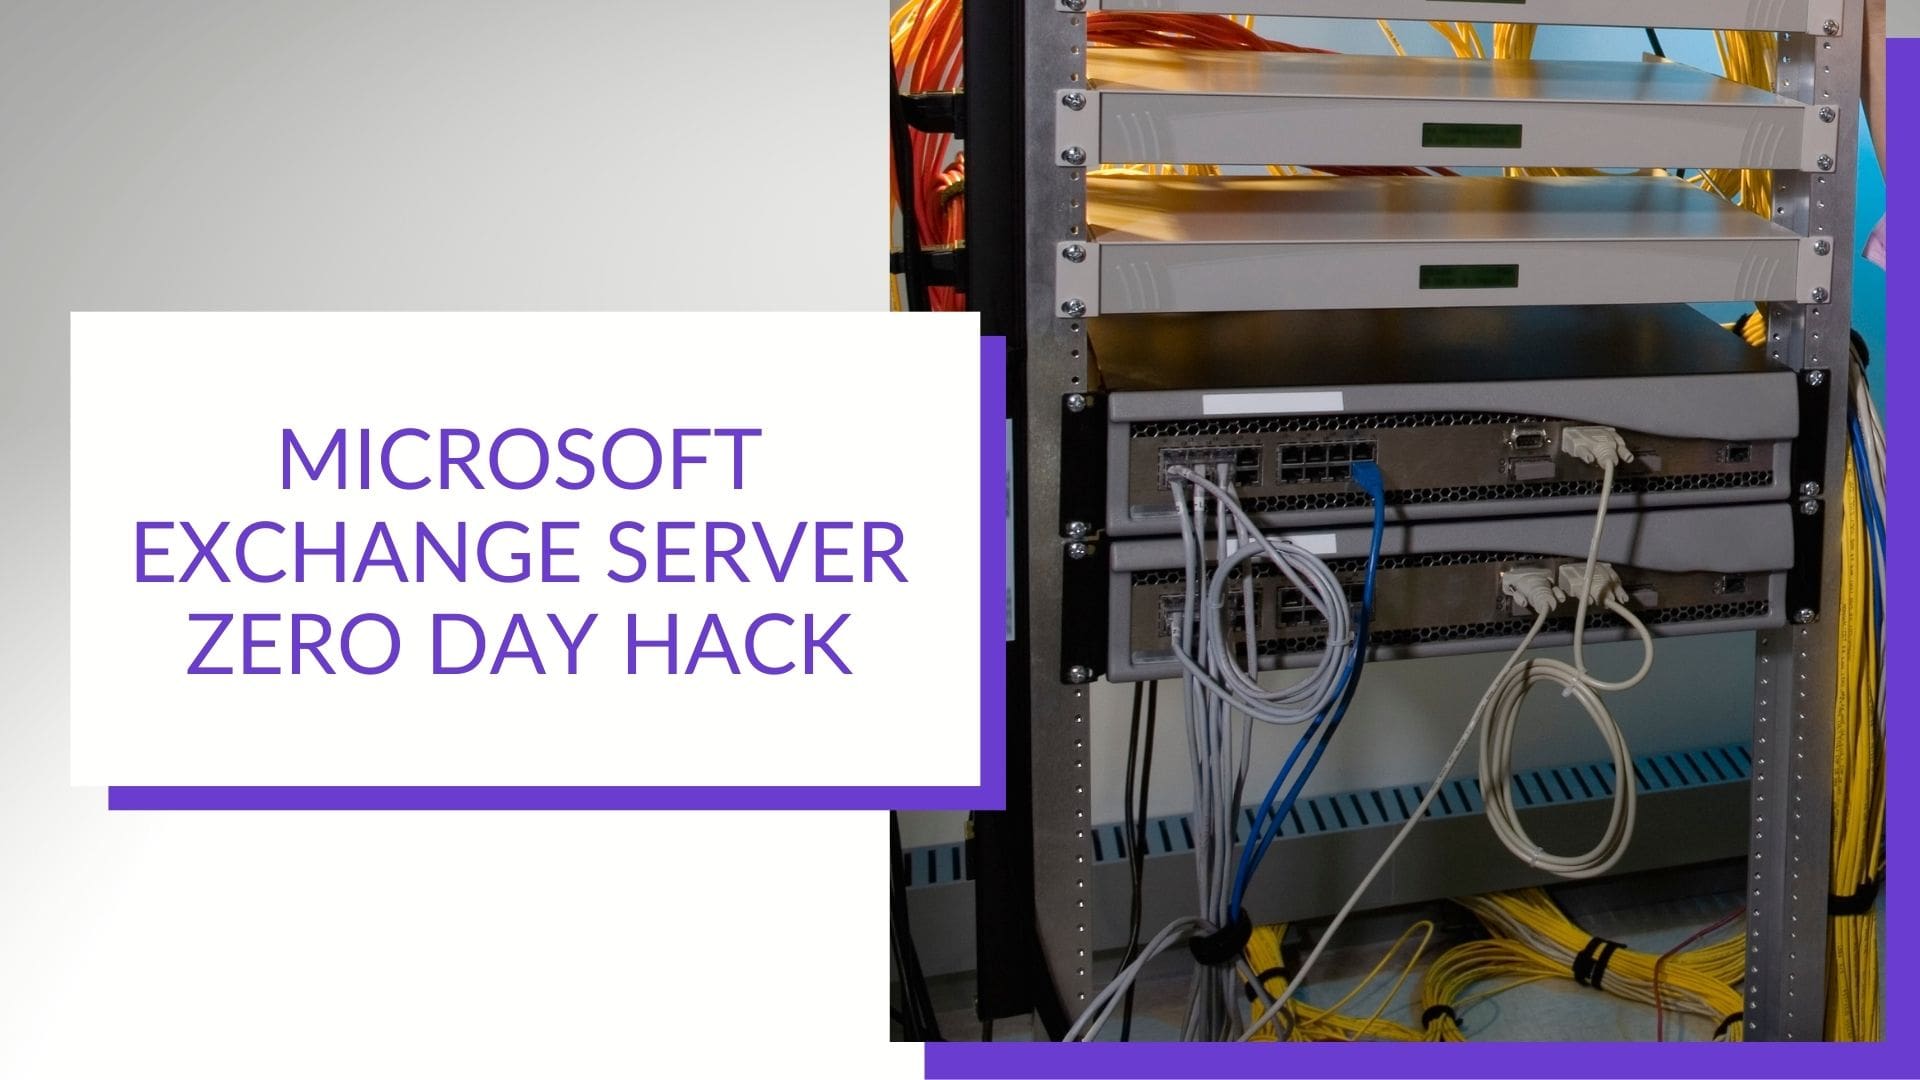 Microsoft Exchange Server image